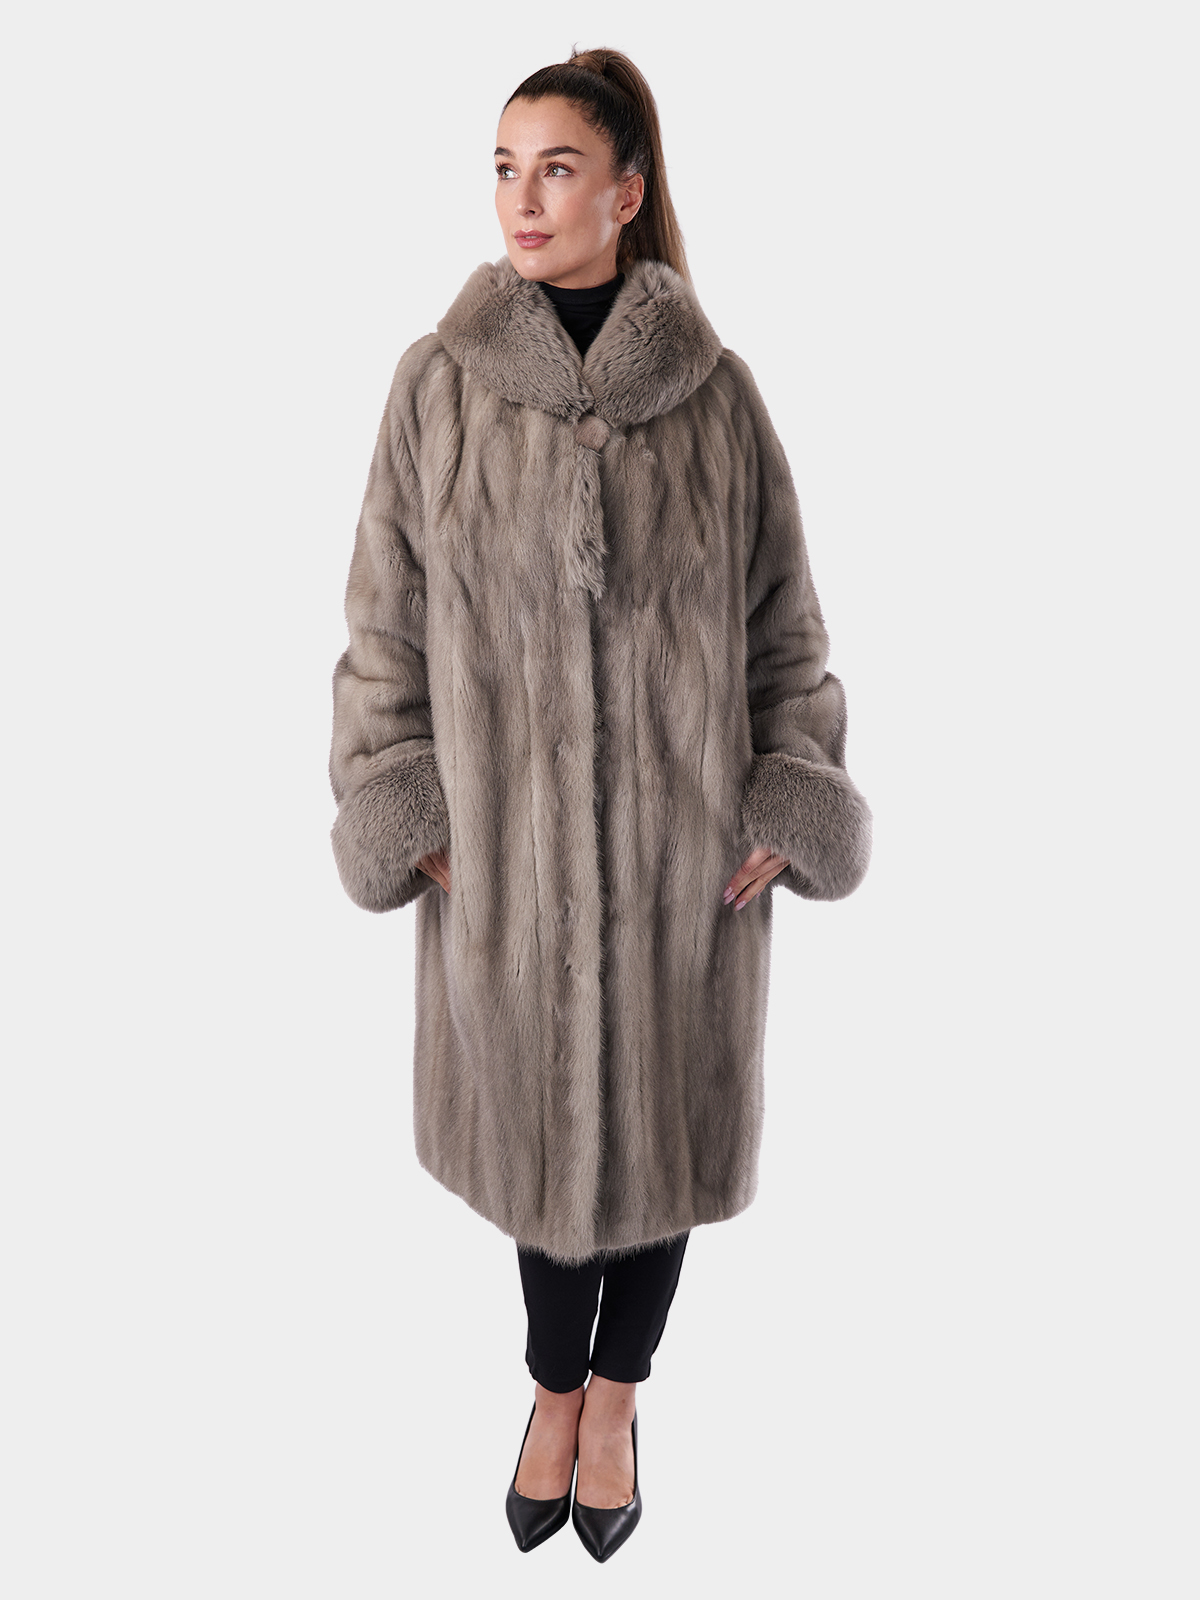 Cerulean Mink Fur Coat w/ Fox Collar and Cuffs | Estate Furs